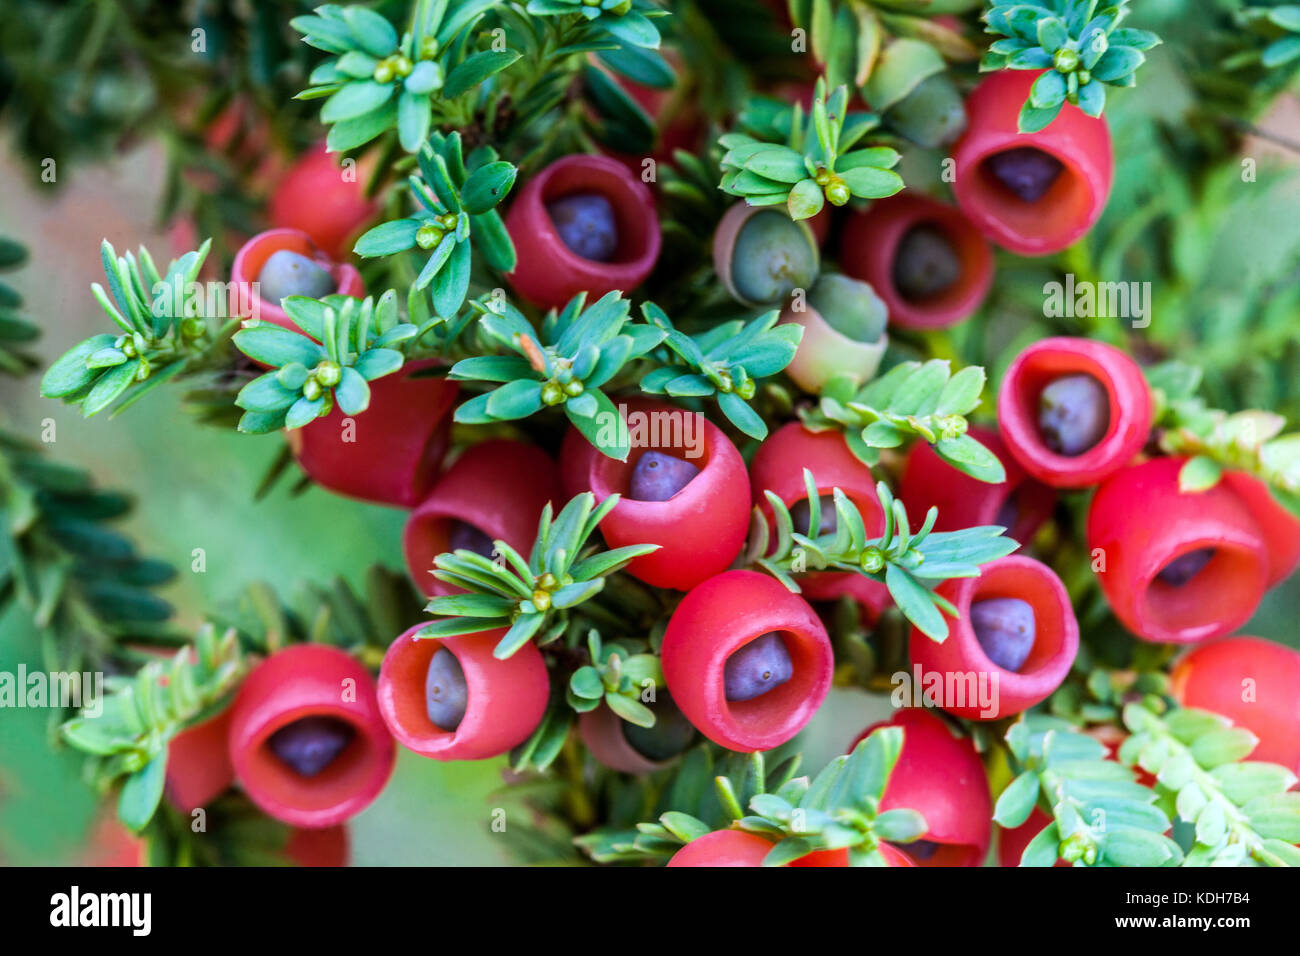 Taxus baccata ' Adpressa ', Yew cones, red berries, tiny needles Stock Photo